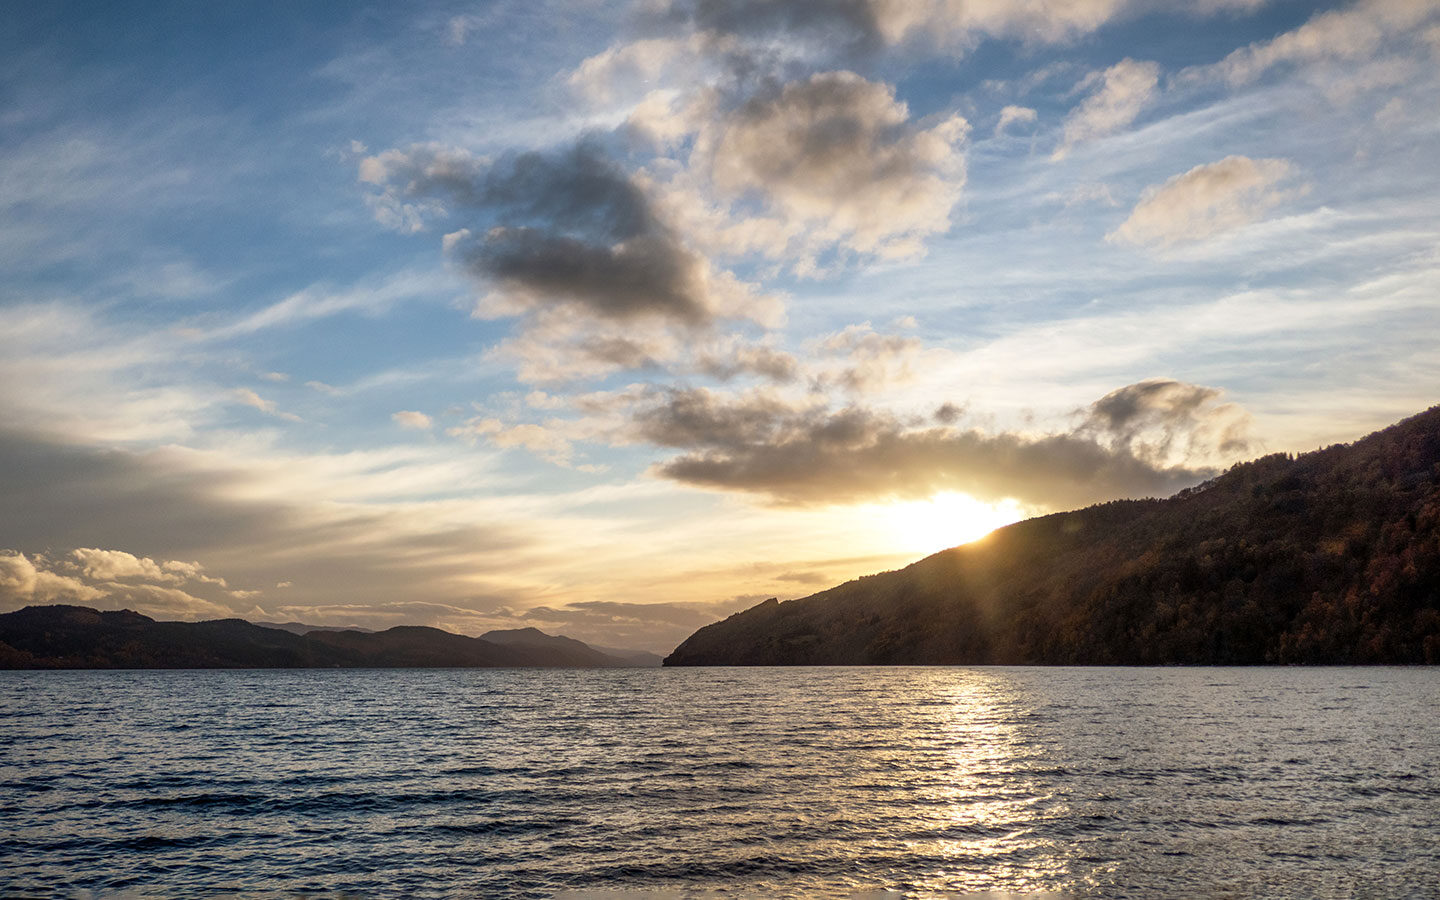 Sunset over Loch Ness, Scotland